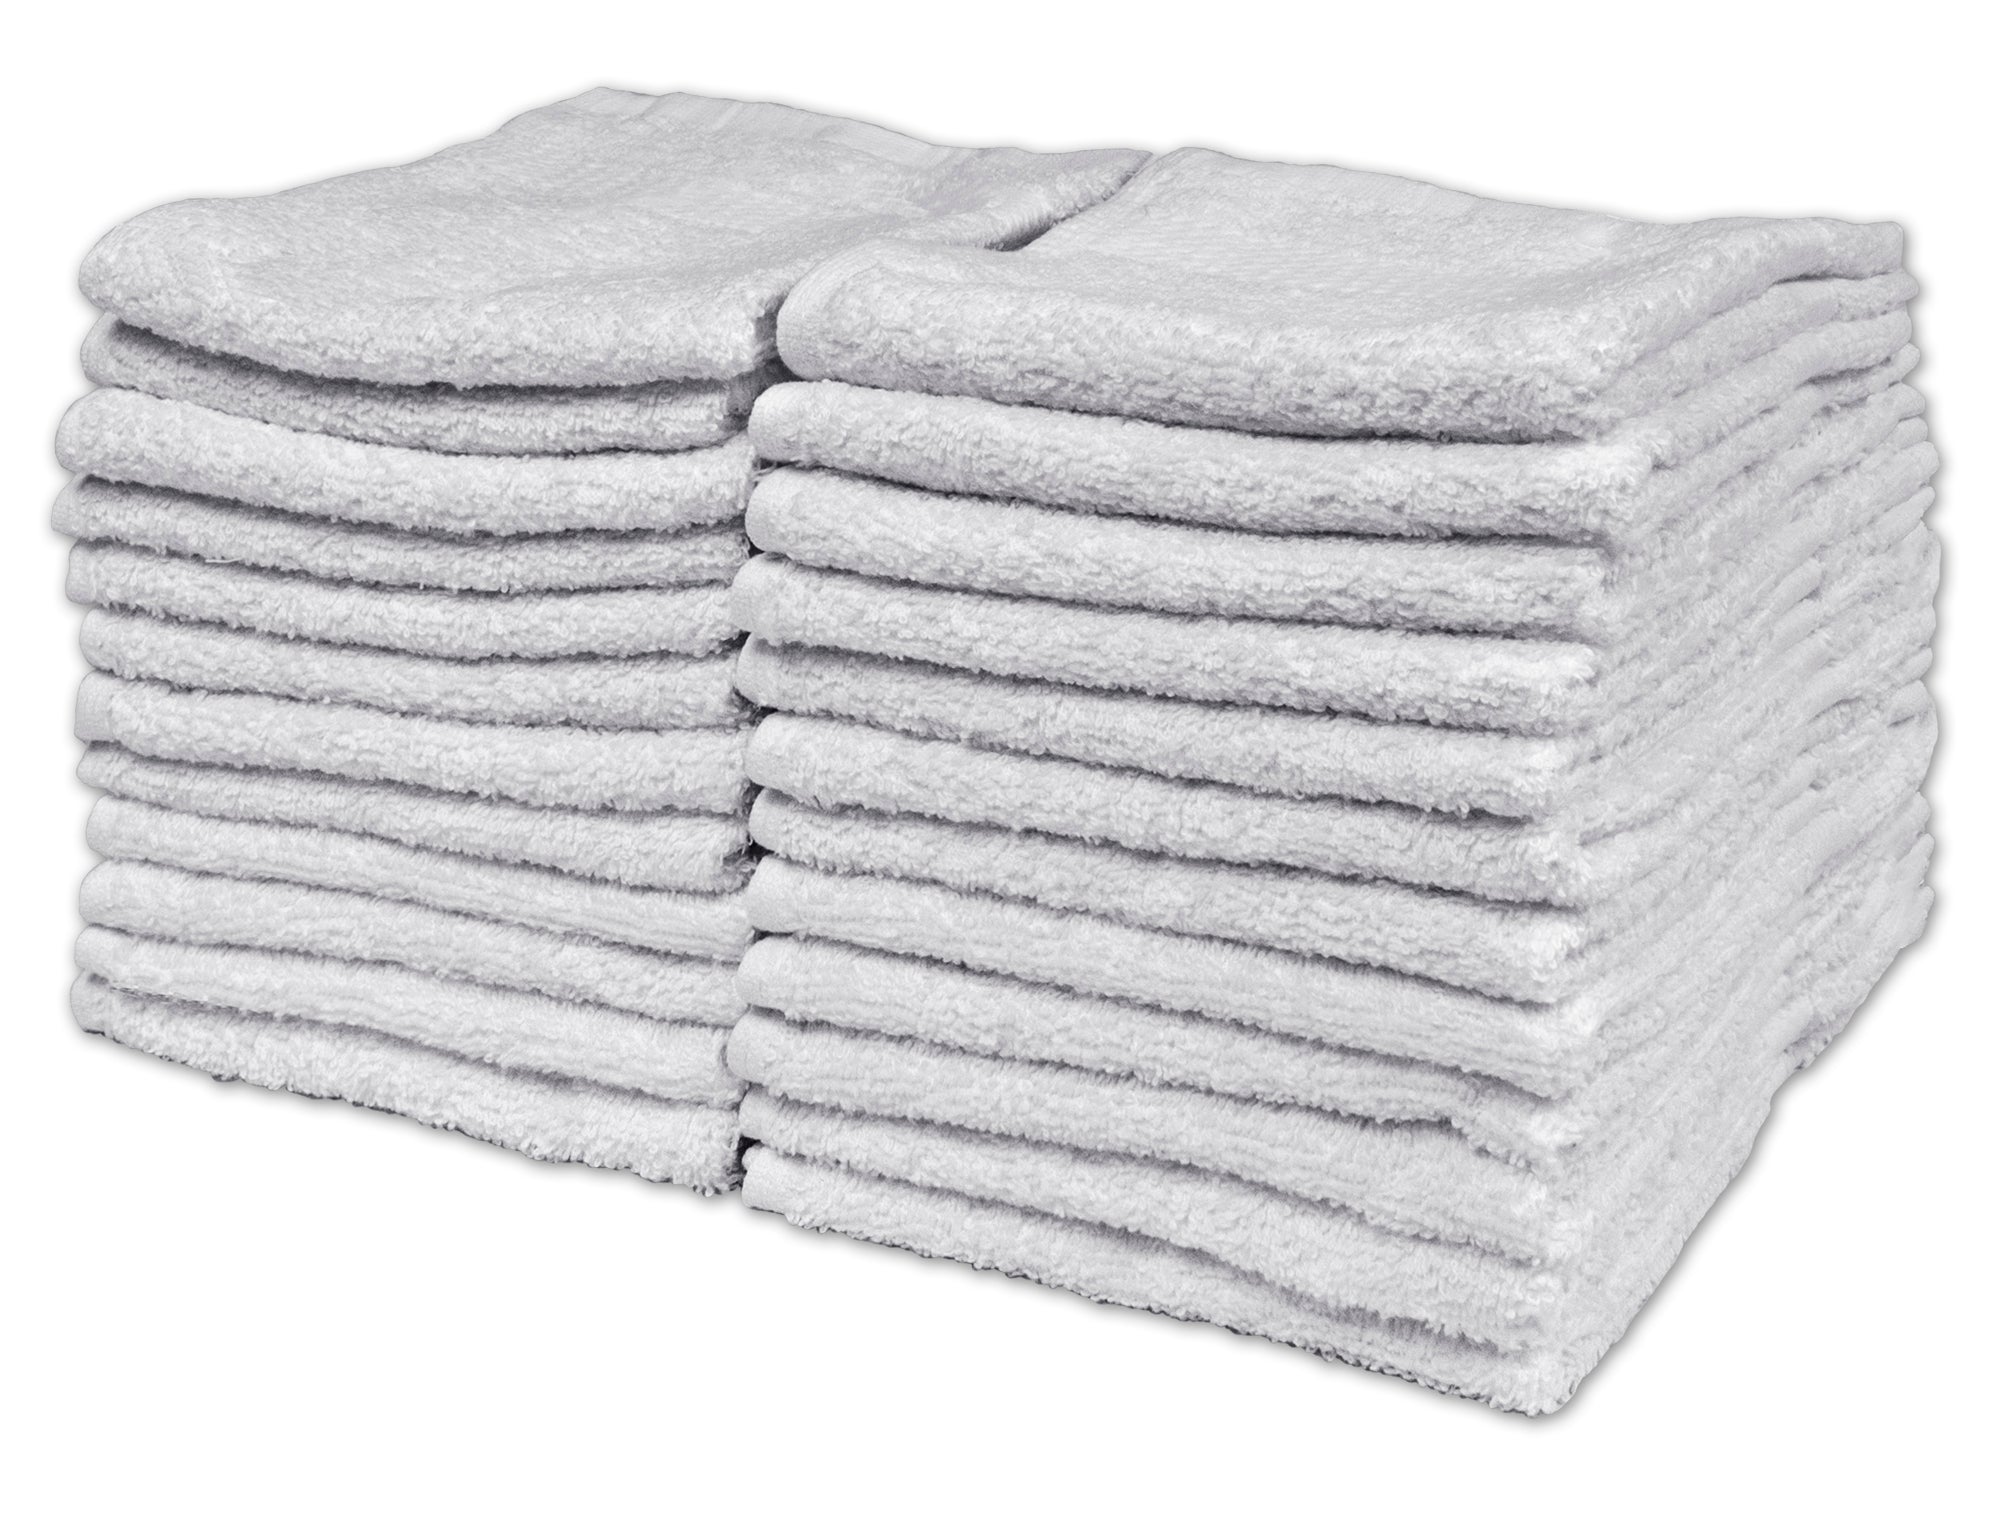 Texrise® Laguna Series 13 x 13 in. Cotton Luxury Wash Cloths – 24